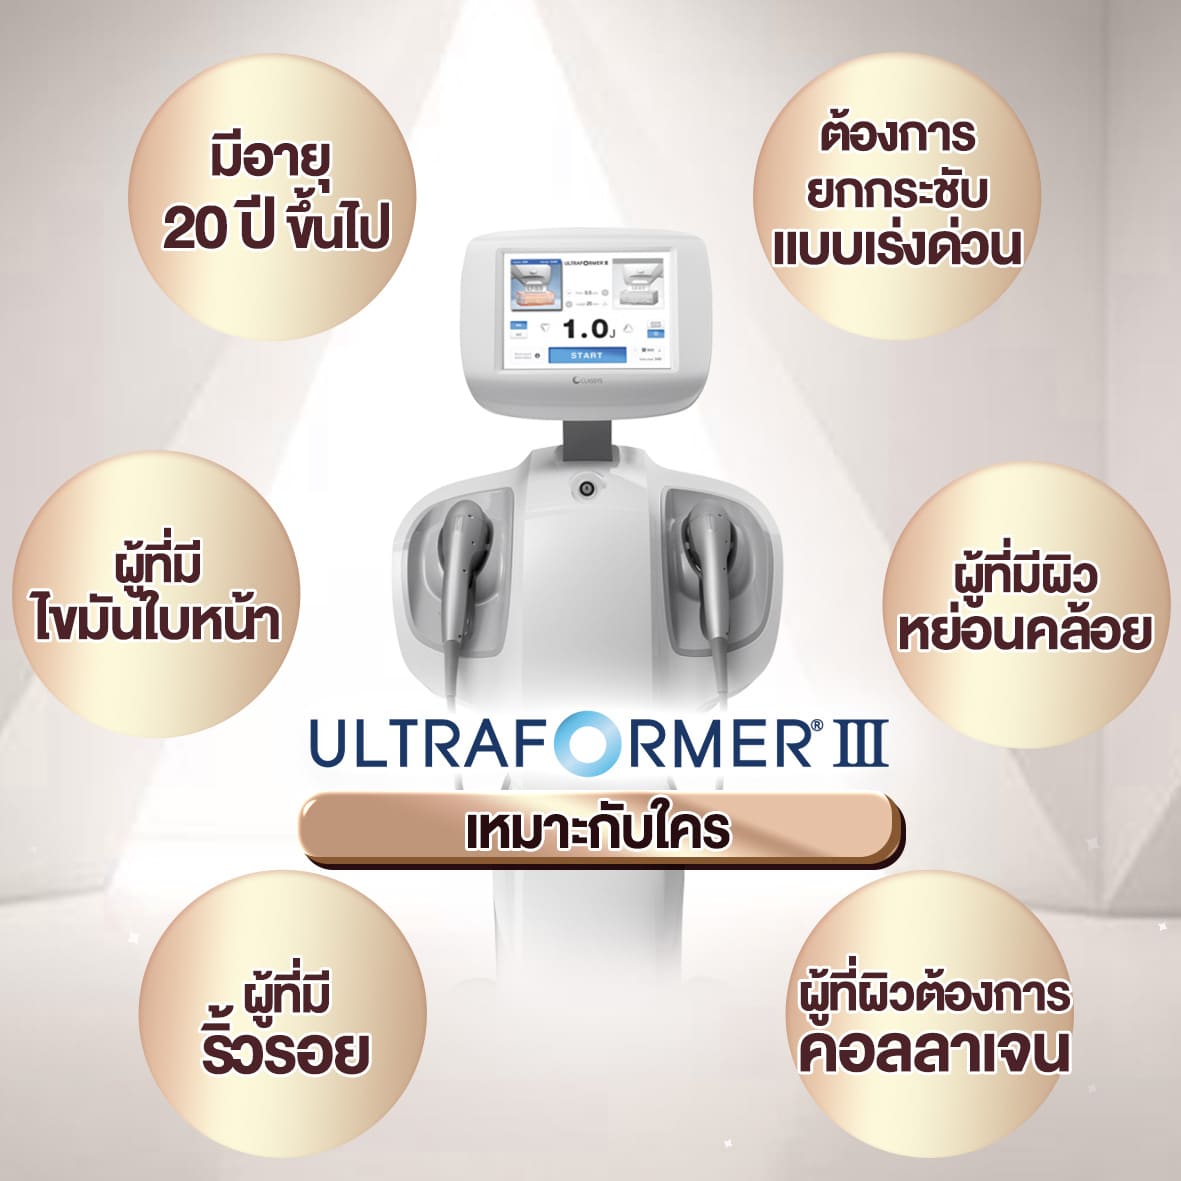 Ultraformer III เหมาะกับใคร